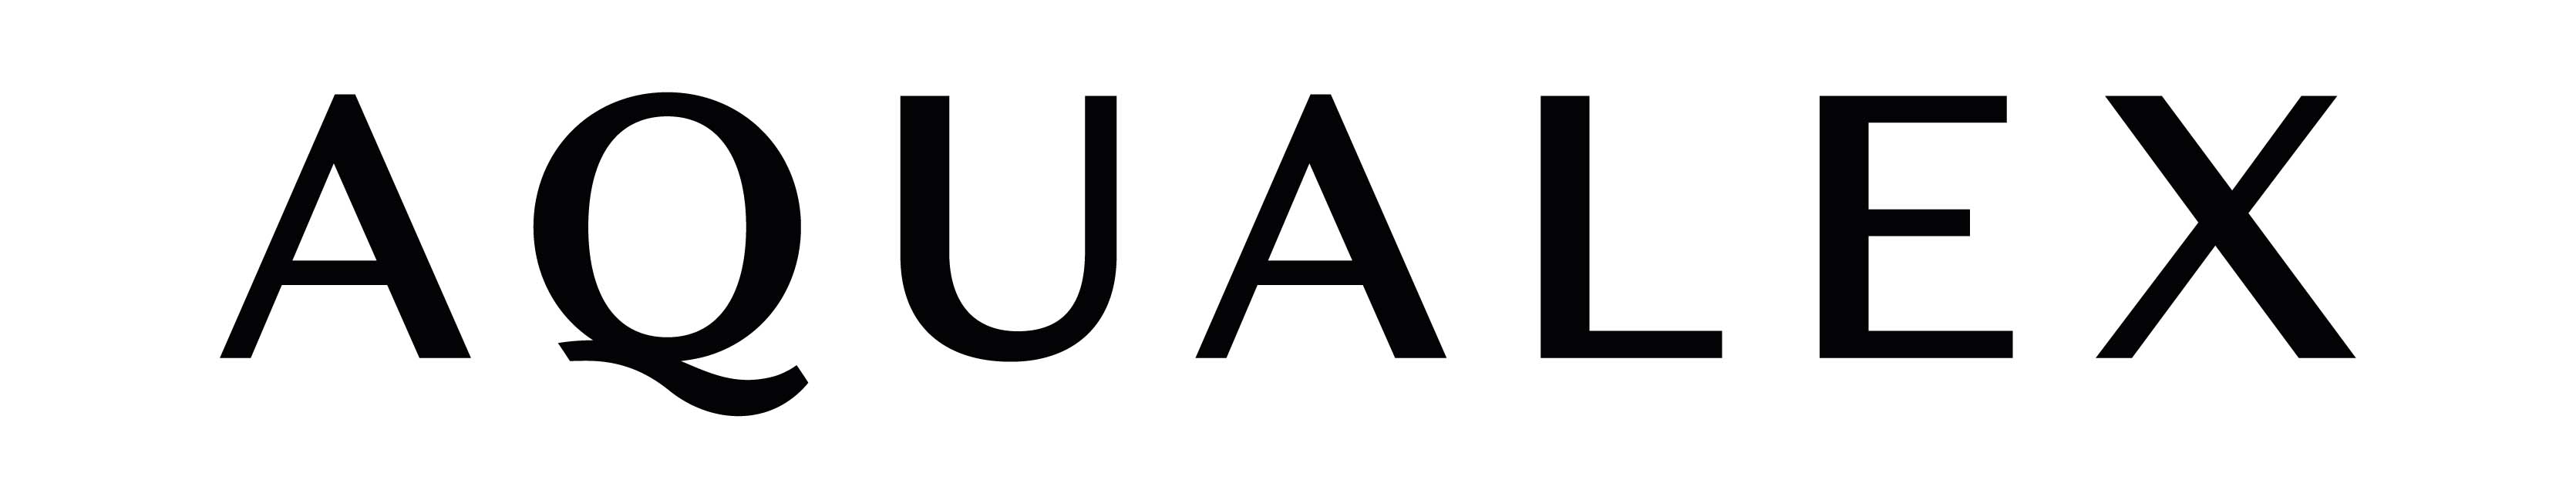 AQUALEX logo